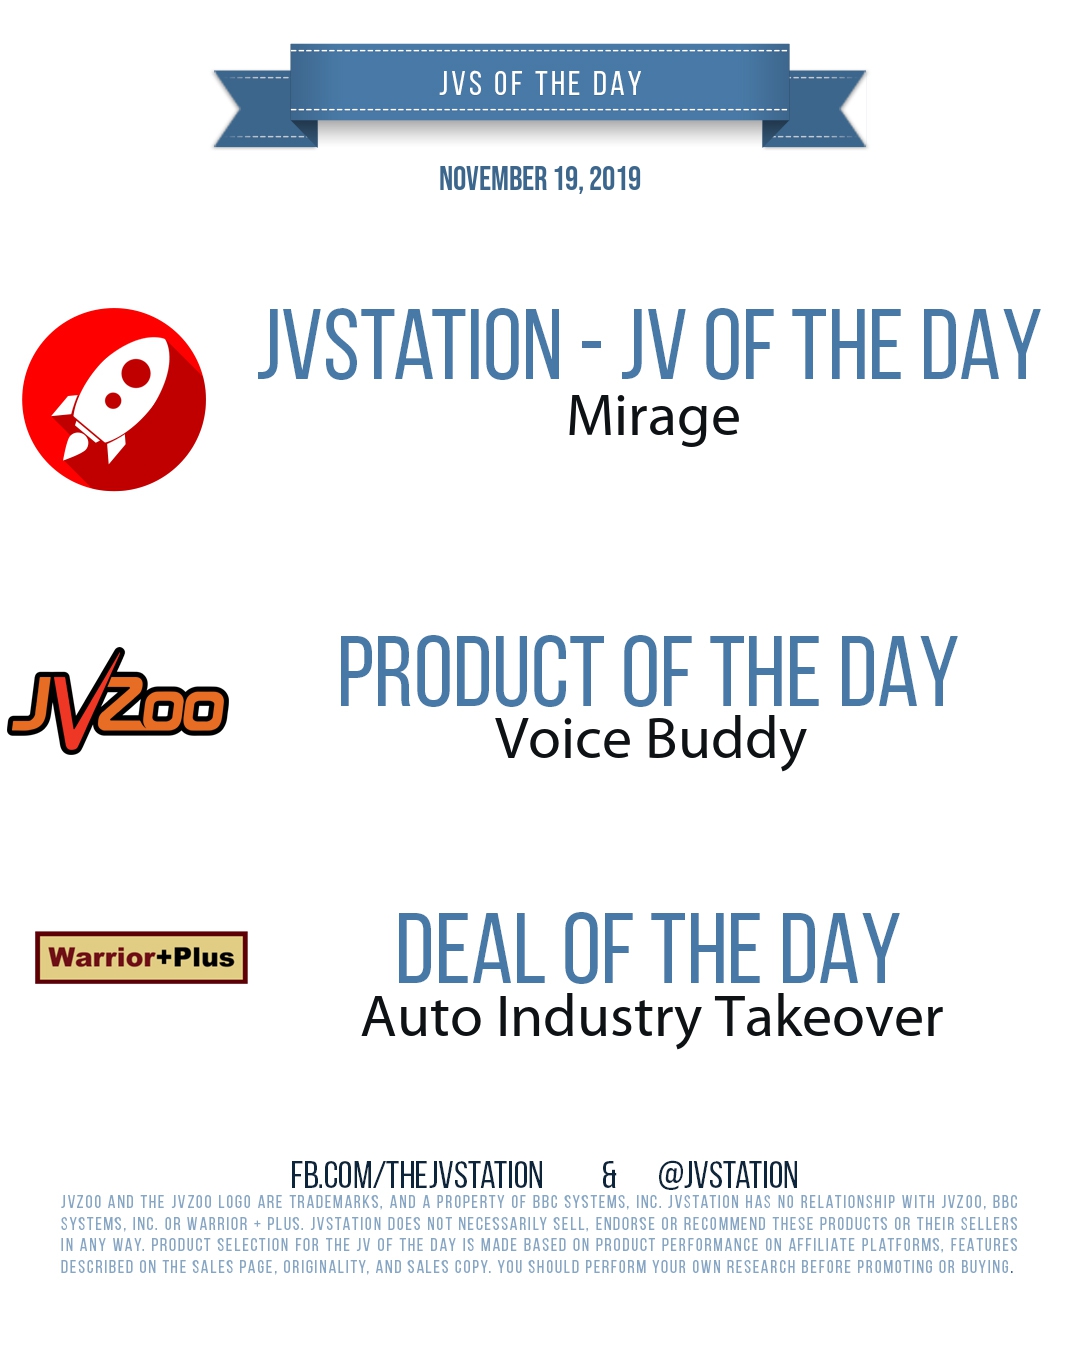 JVs of the day - November 19, 2019